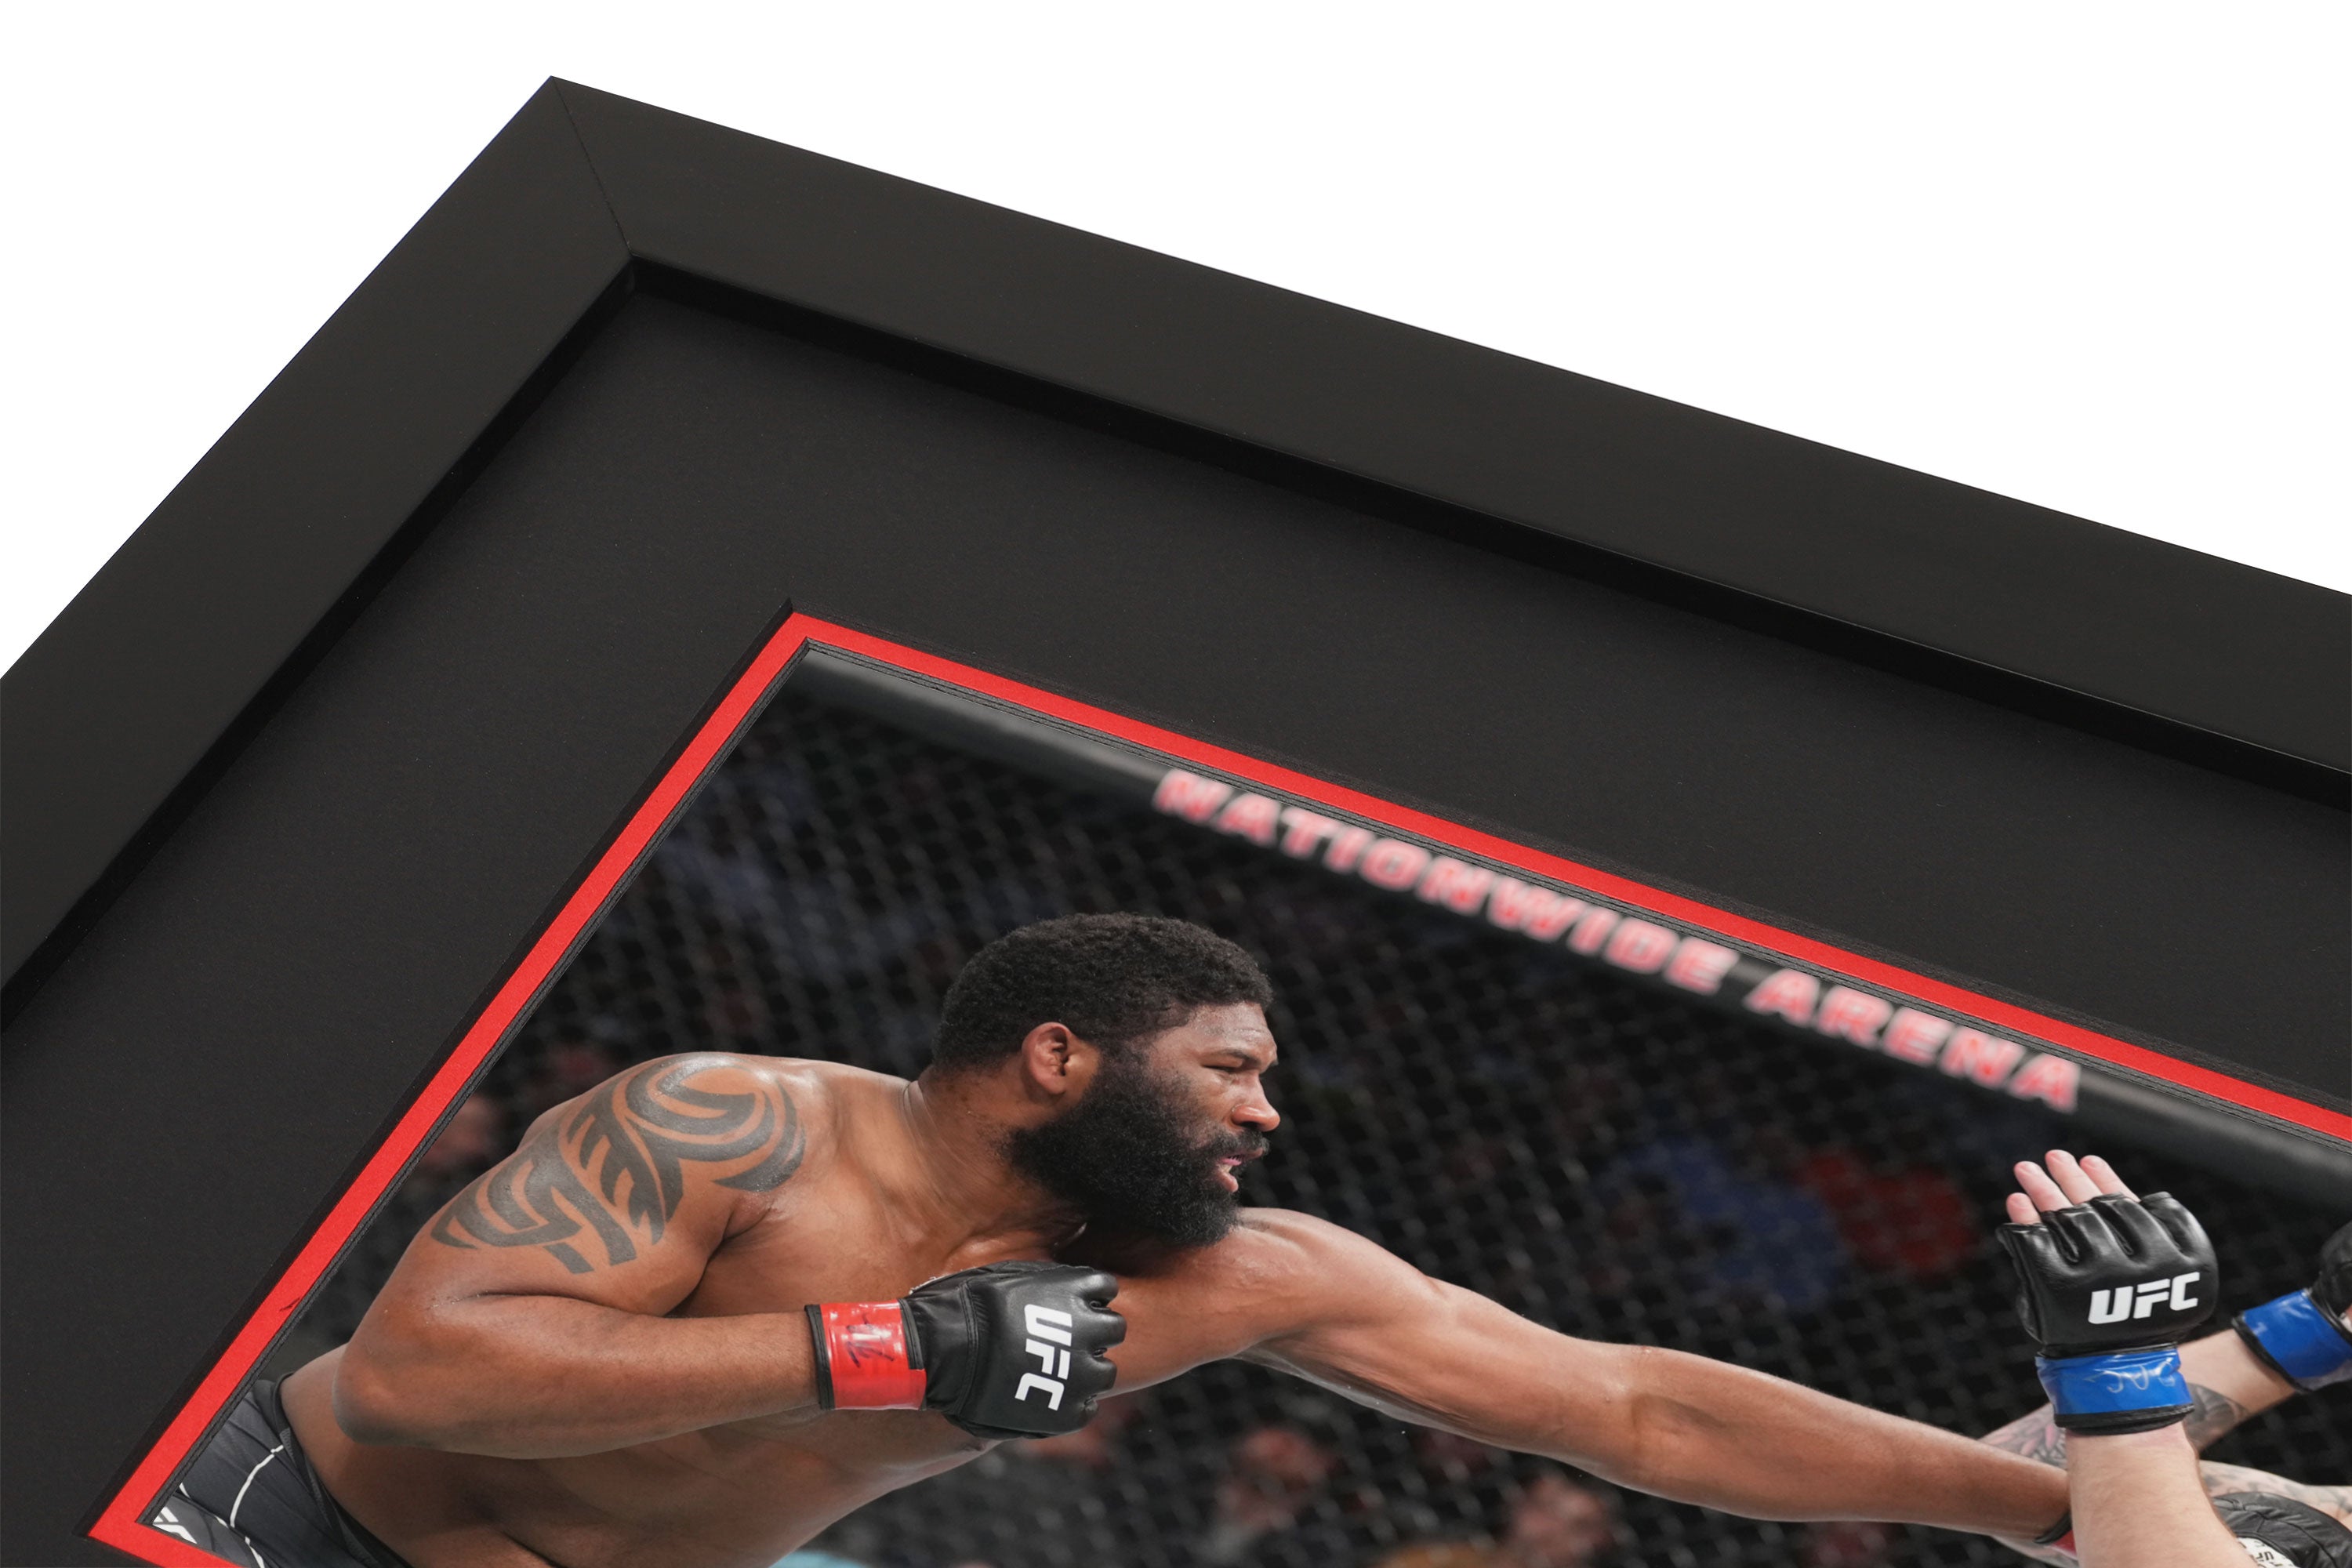 UFC Fight Night: Blaydes vs Daukaus 2022 Canvas & Photo